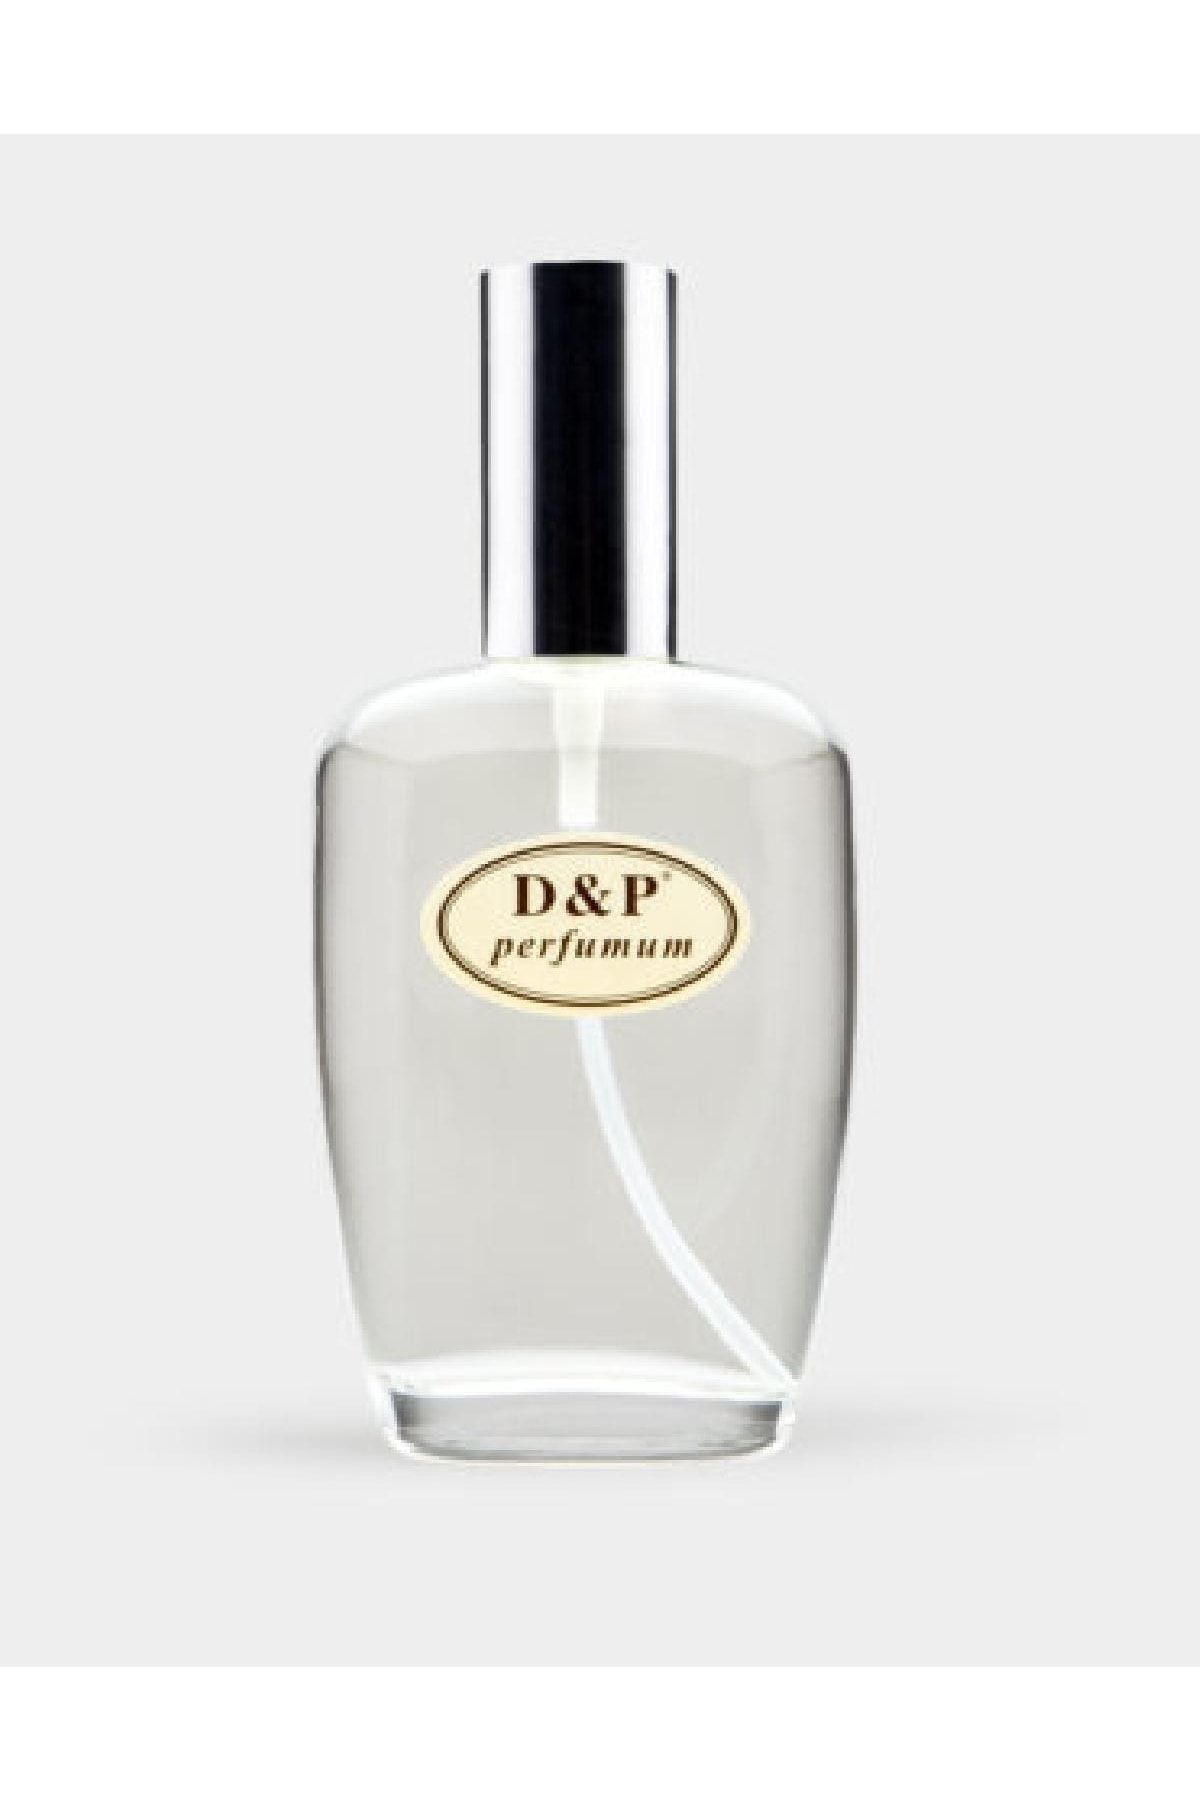 D&P Perfumum A17 Kadın Parfüm EDP 50 ml